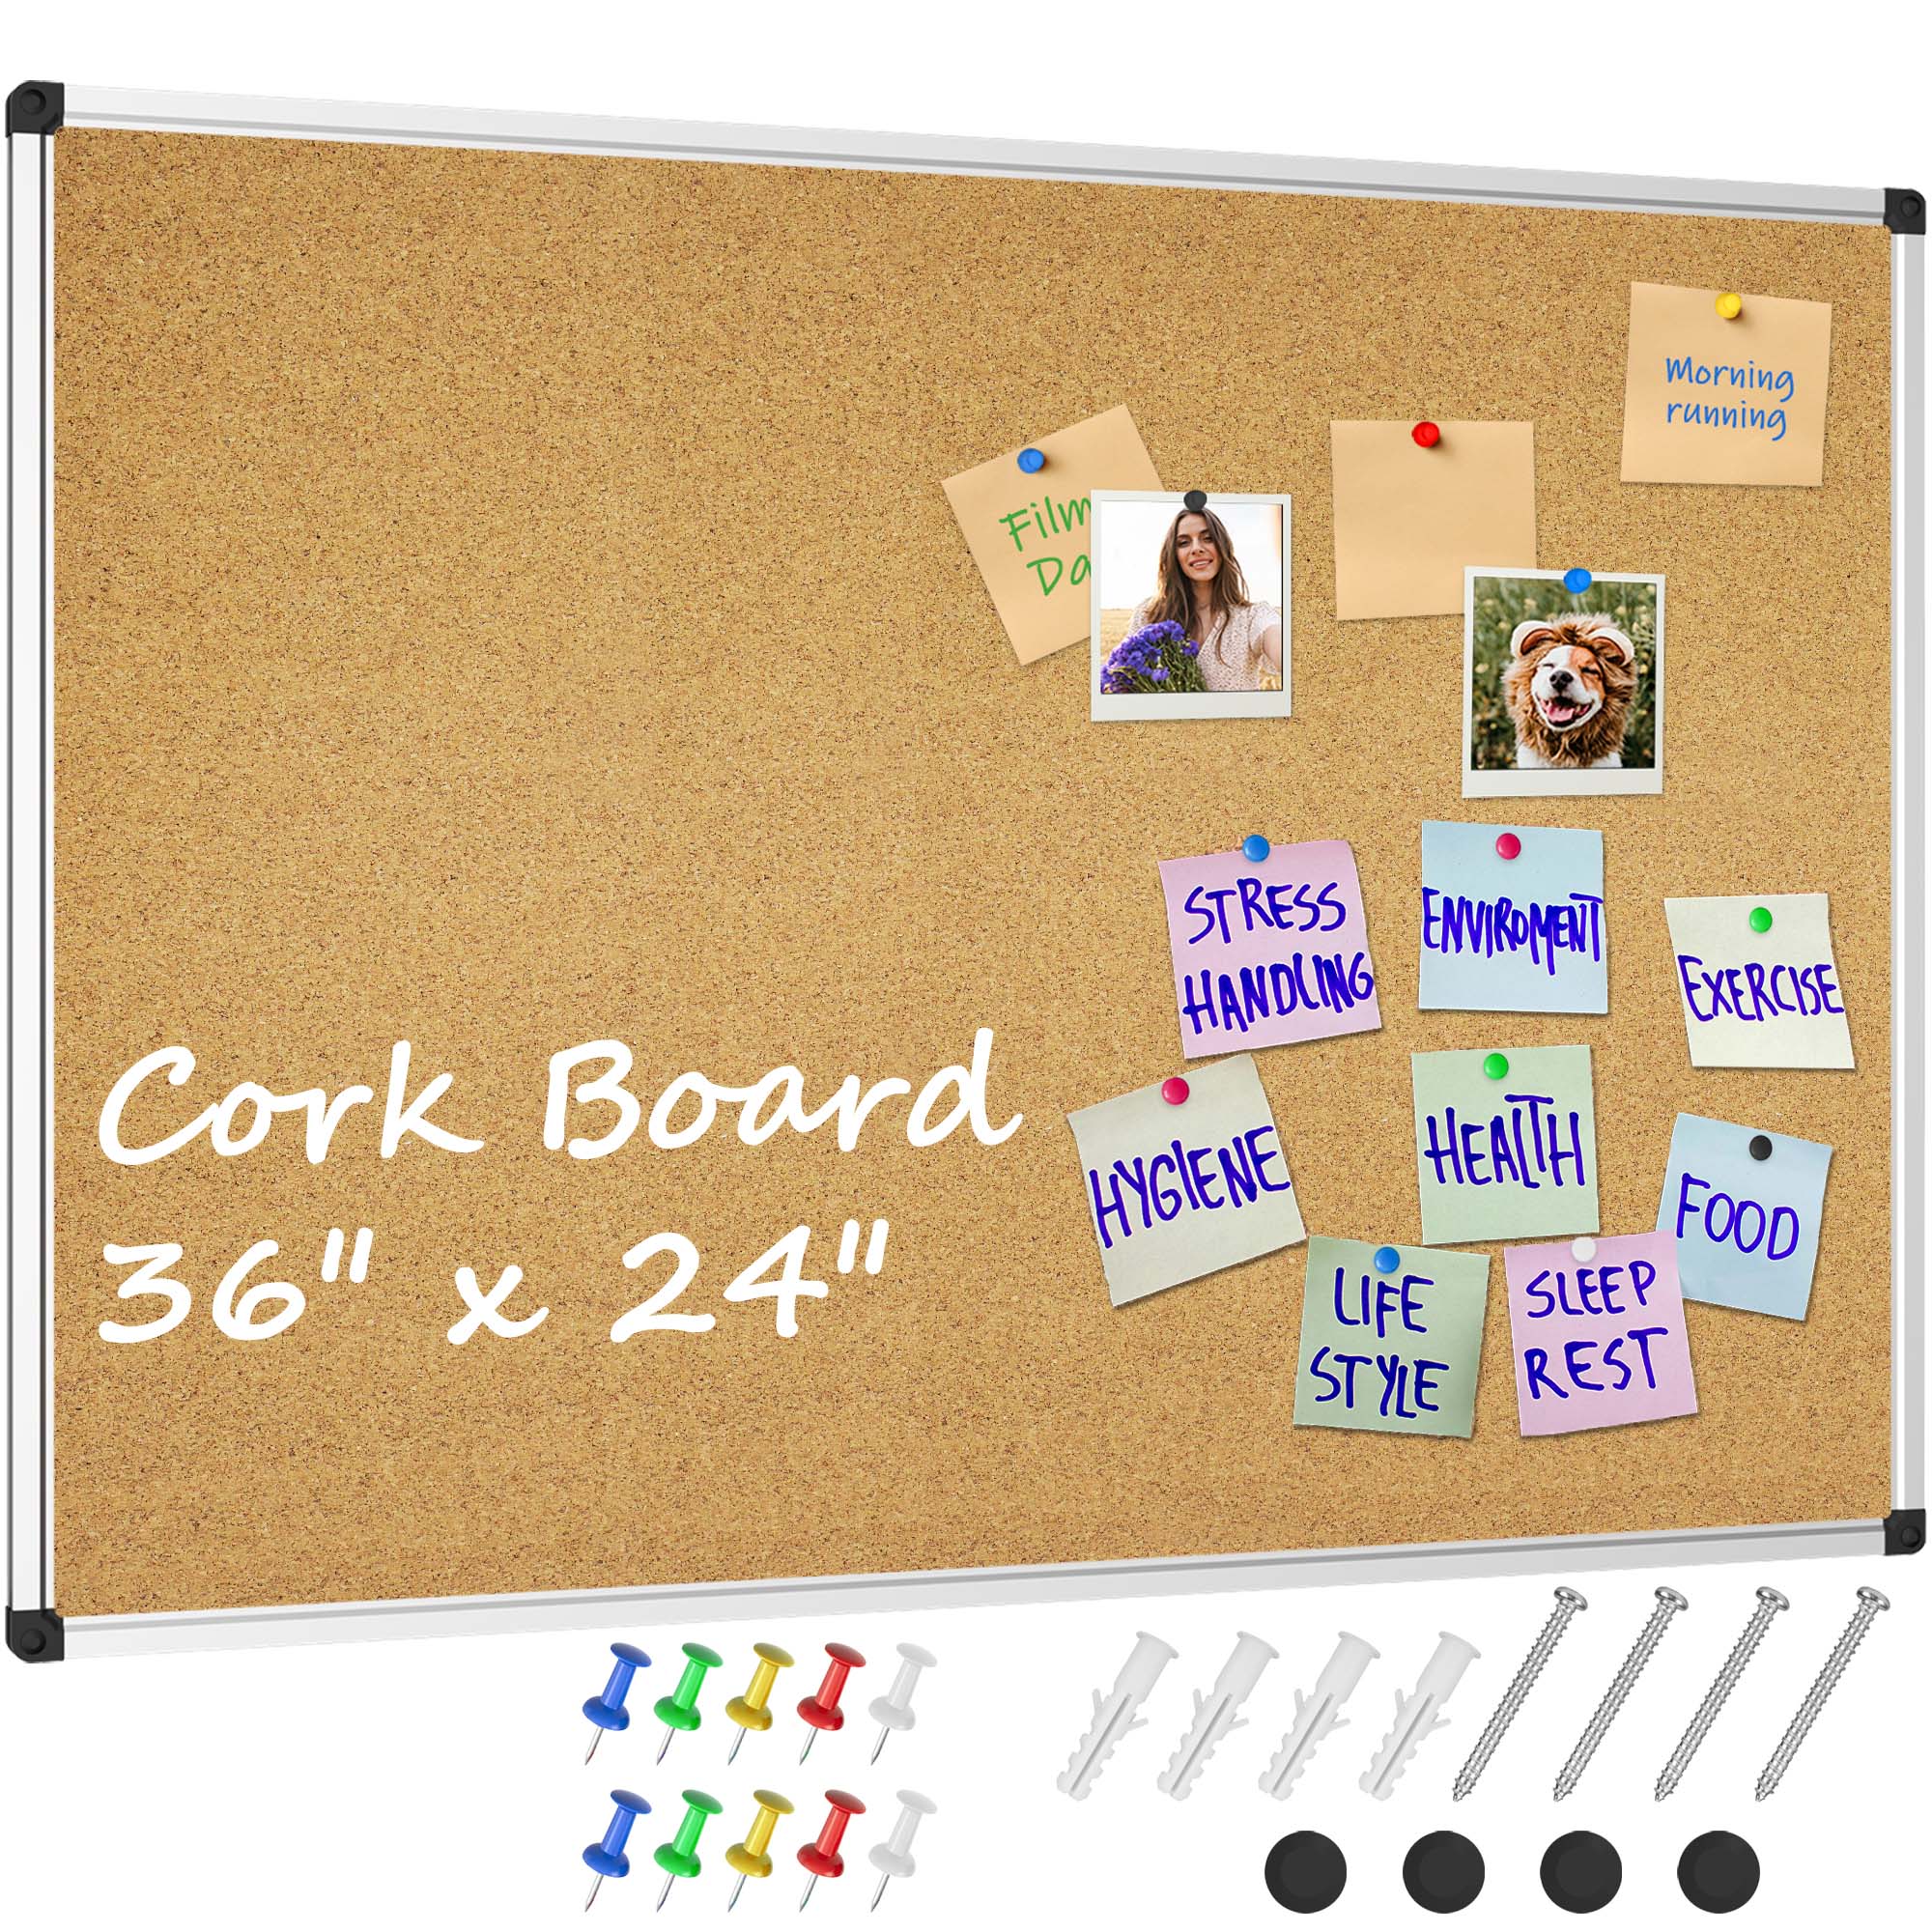 X BOARD Cork Board 36" x 24" Bulletin Board with Aluminum Frame, Corkboard 3' x 2' Pin Board for Wall - image 1 of 7